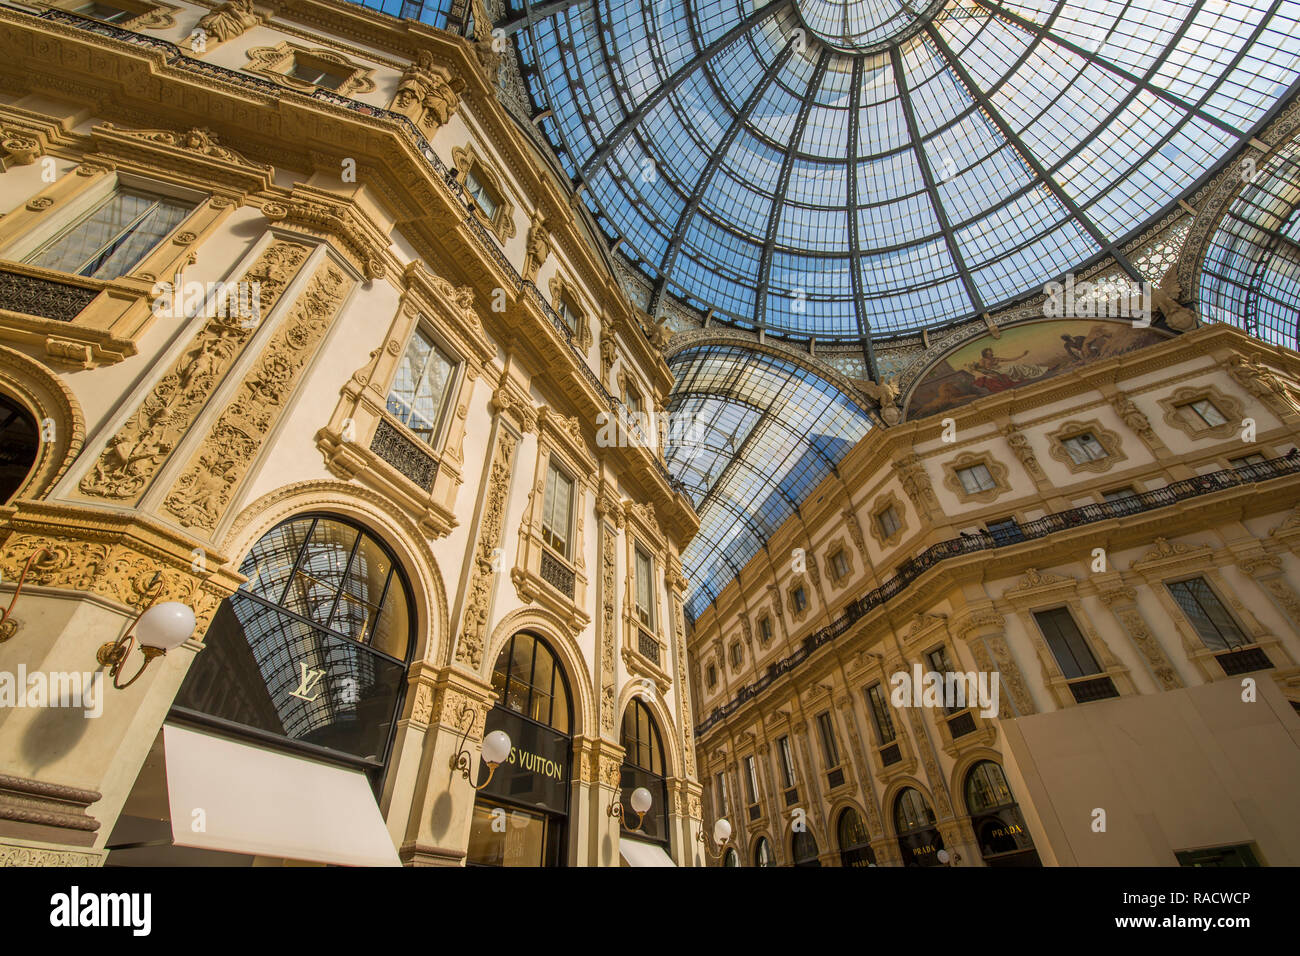 The Prada fashion store in the Galleria Vittorio Emanuele II